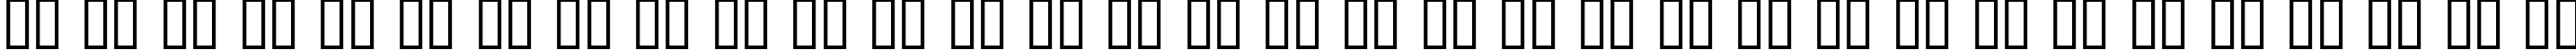 Пример написания русского алфавита шрифтом Bodie MF Holly